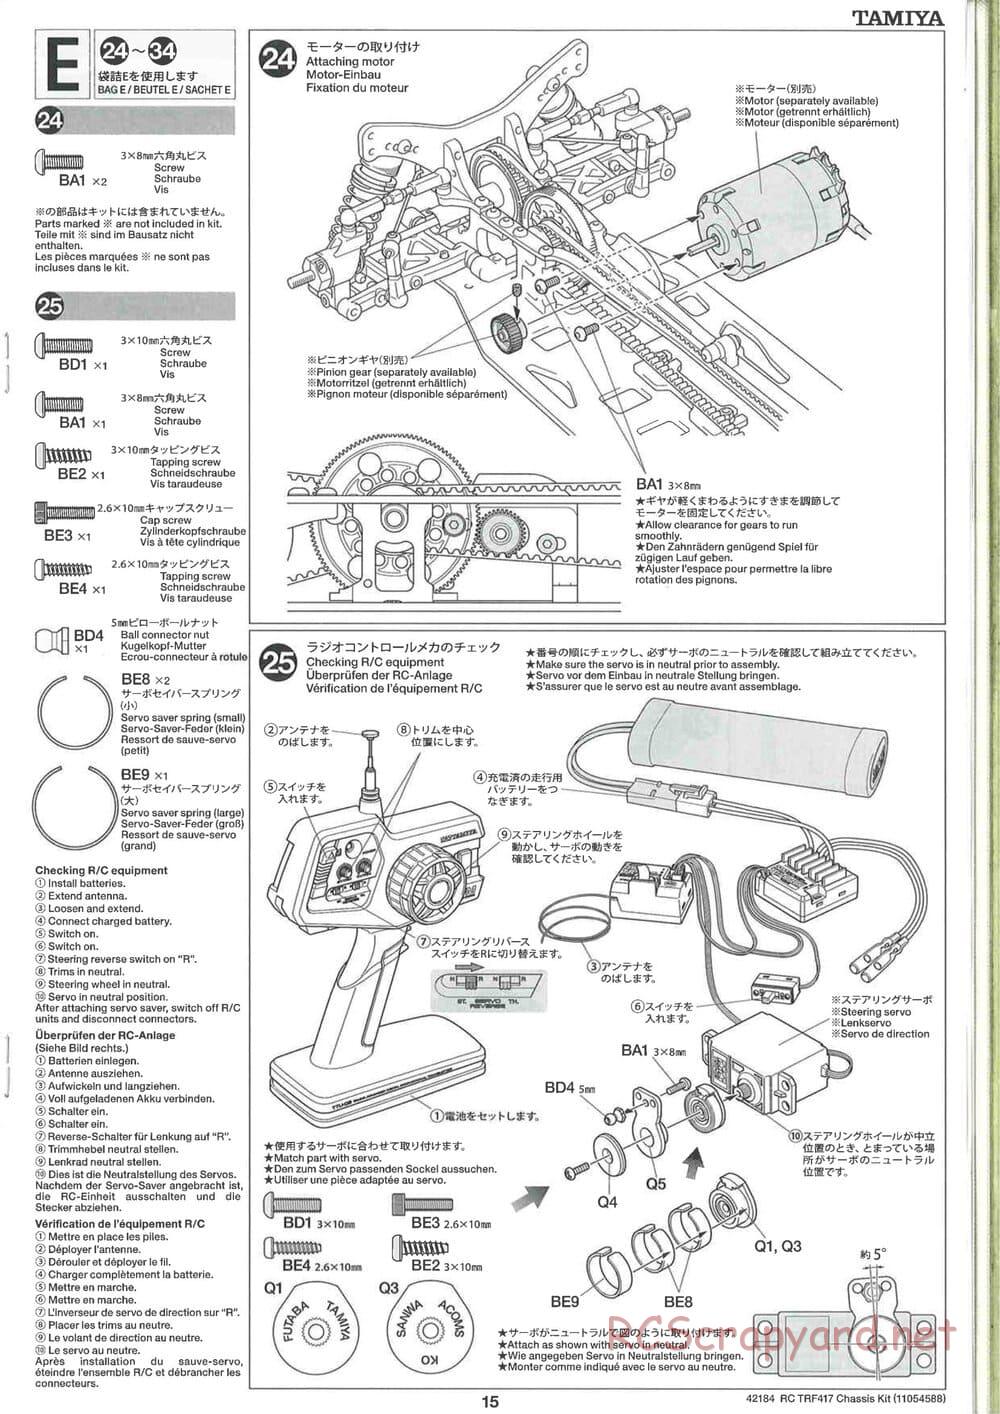 Tamiya - TRF417 Chassis - Manual - Page 15